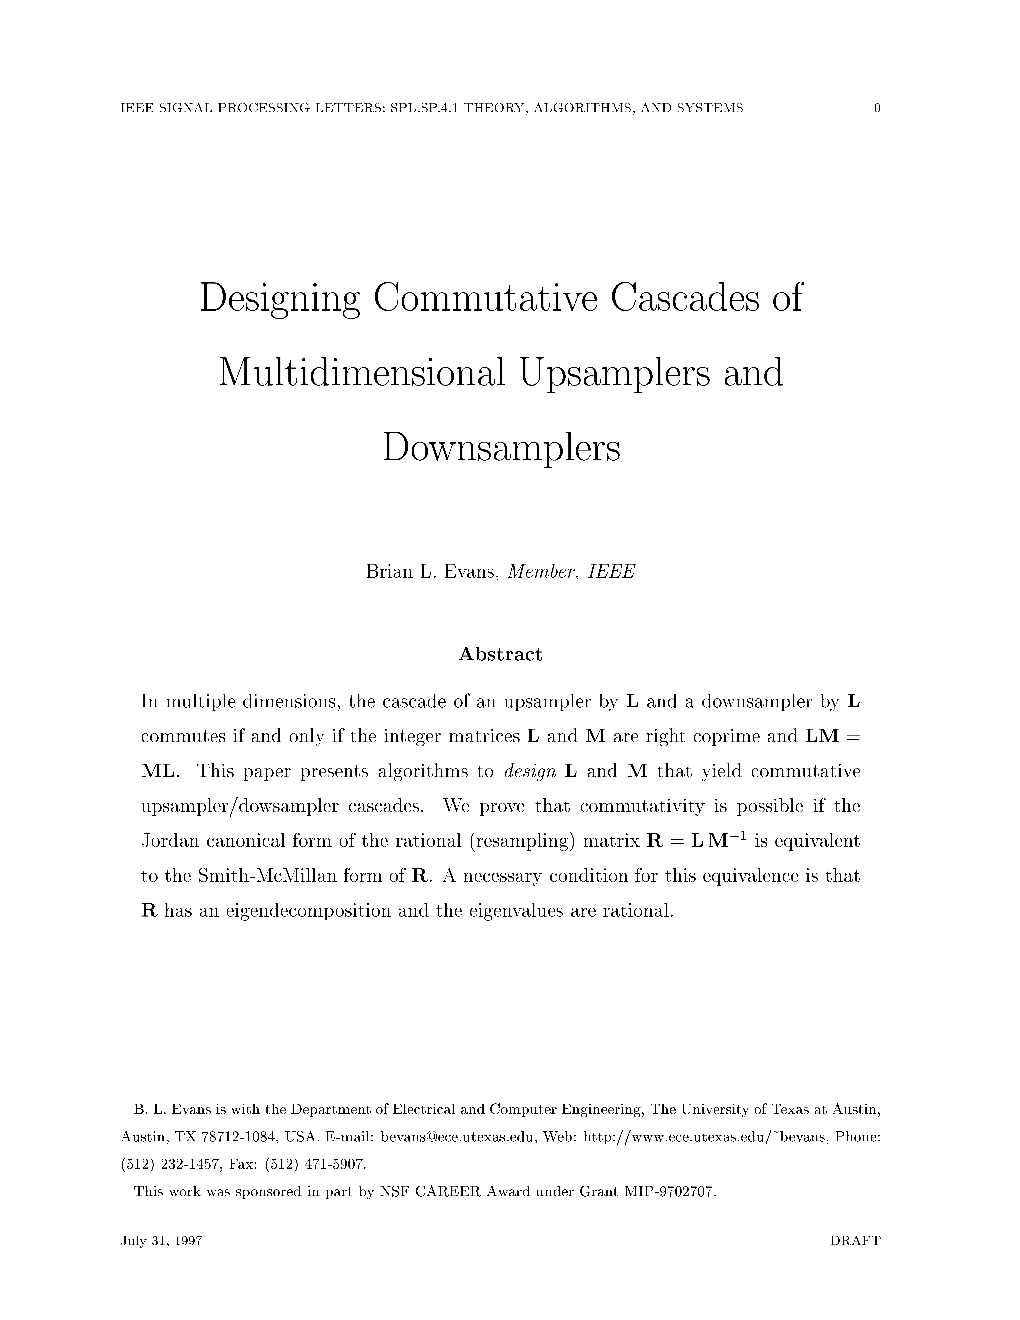 Designing Commutative Cascades of Multidimensional Upsamplers And